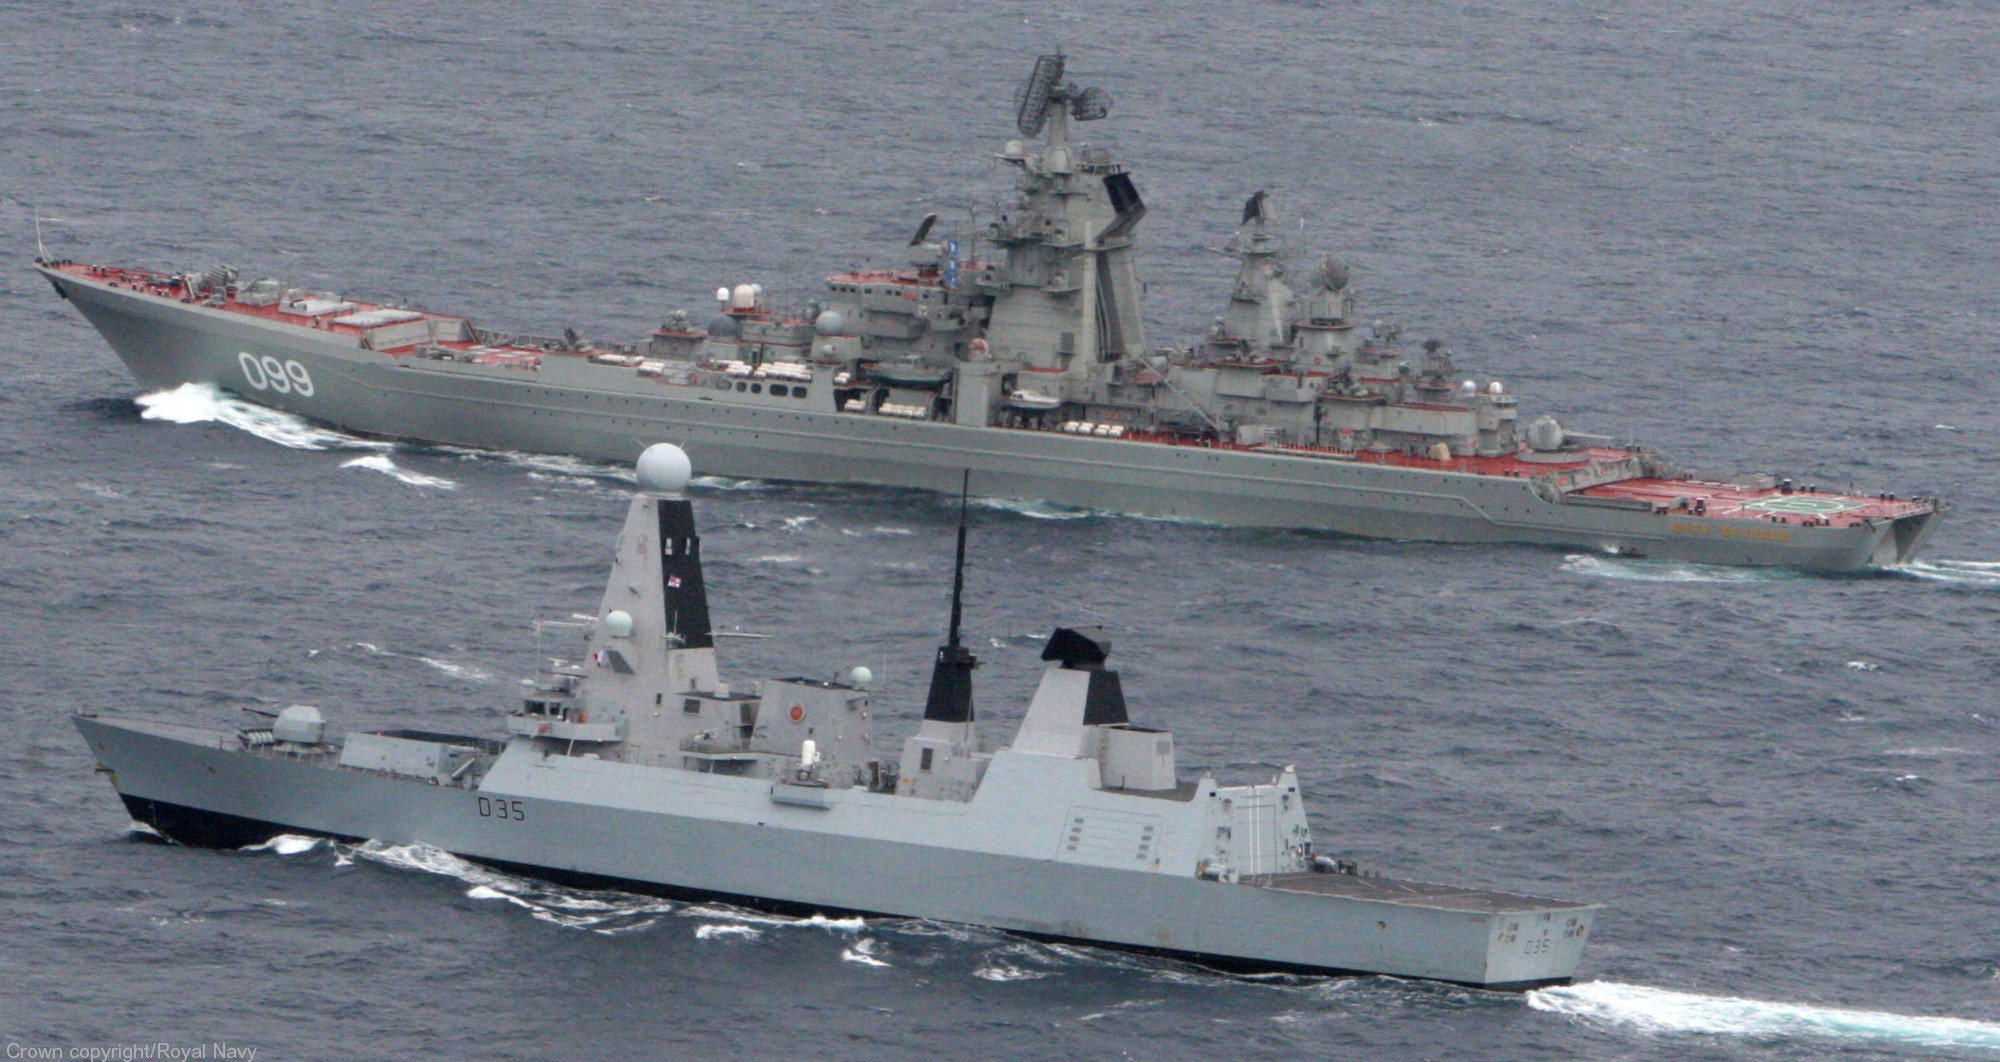 d-35 hms daring destroyer rfs pyotr velikiy 099 battlecruiser kirov class russian navy